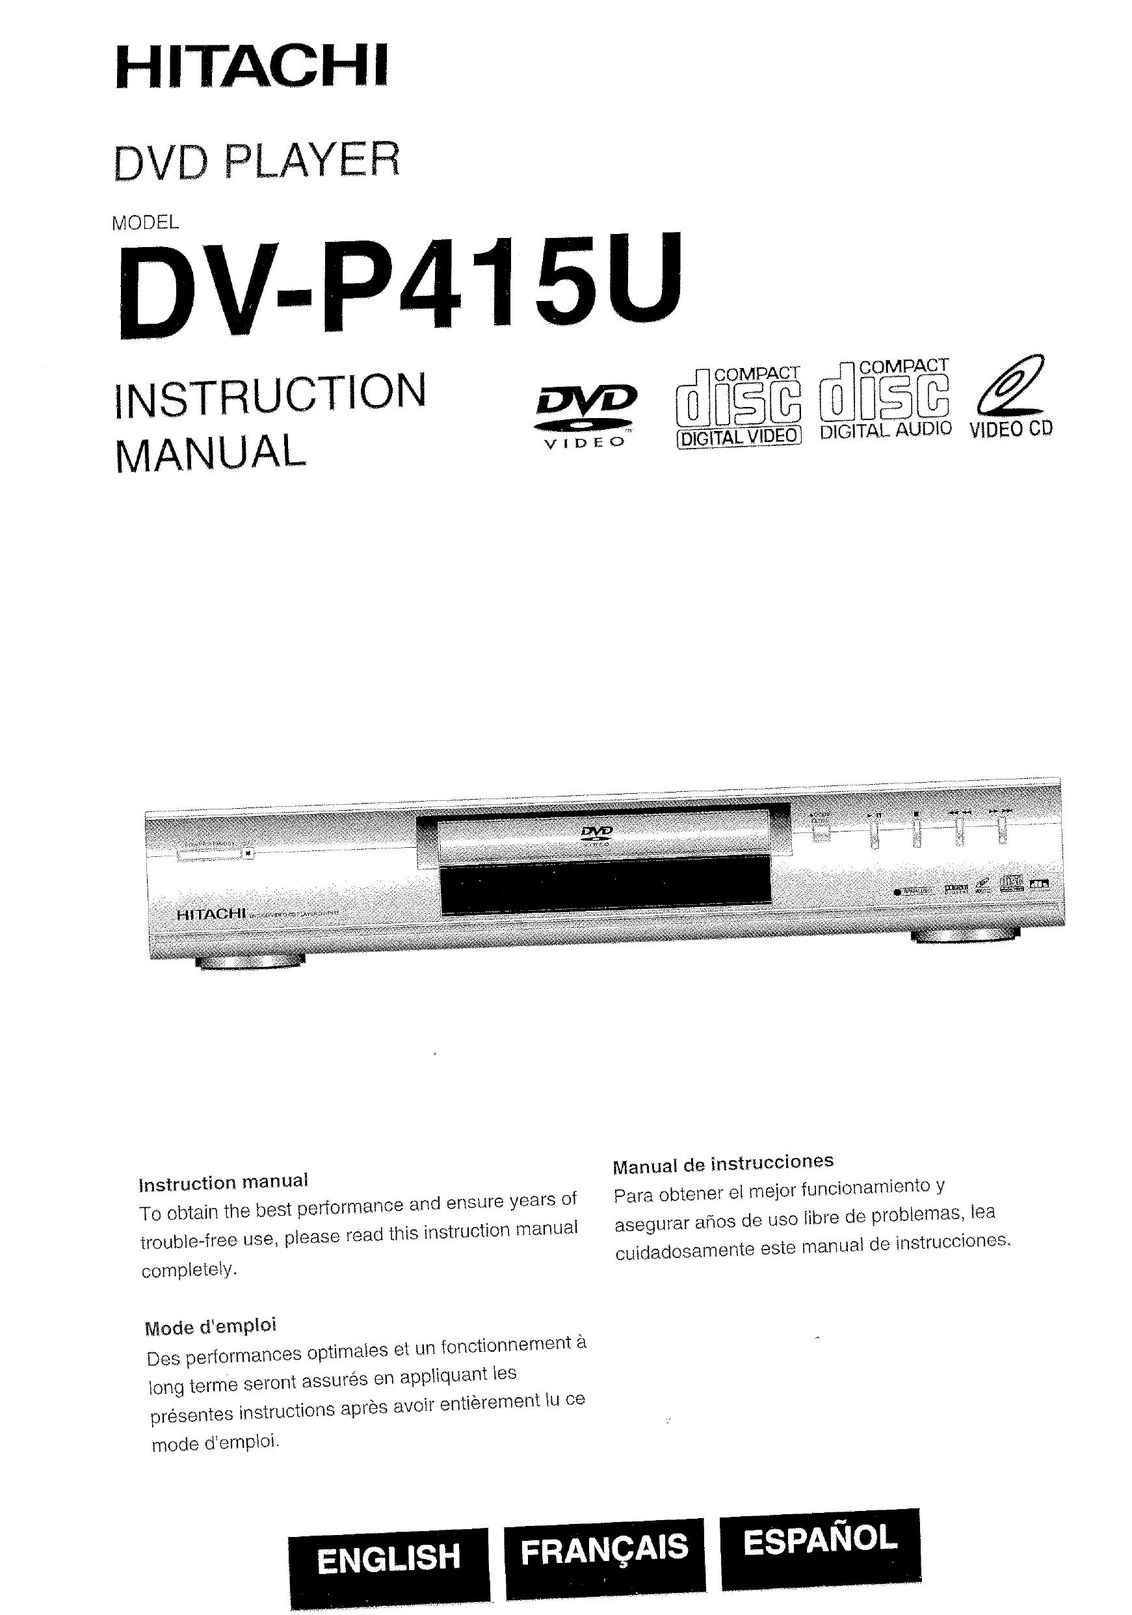 Hitachi DVP415U DVD Player User Manual